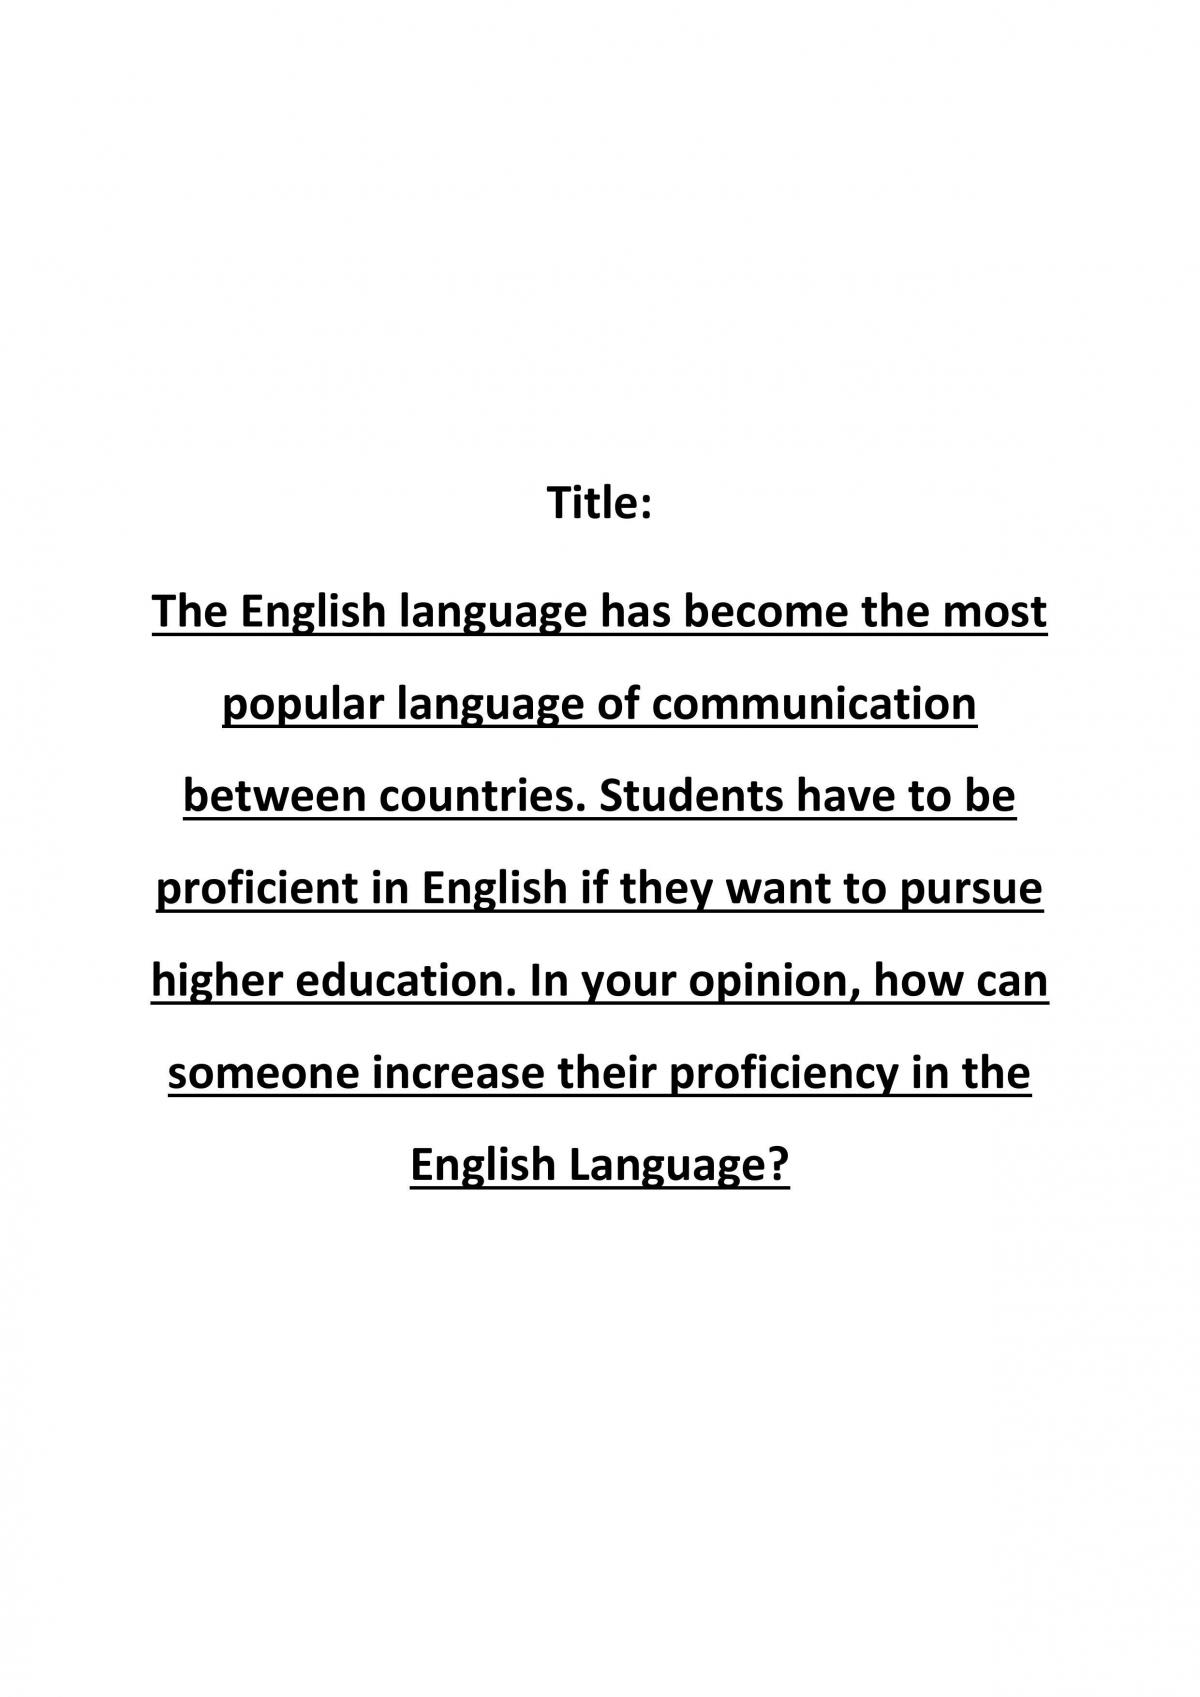 good proficiency in english language essay